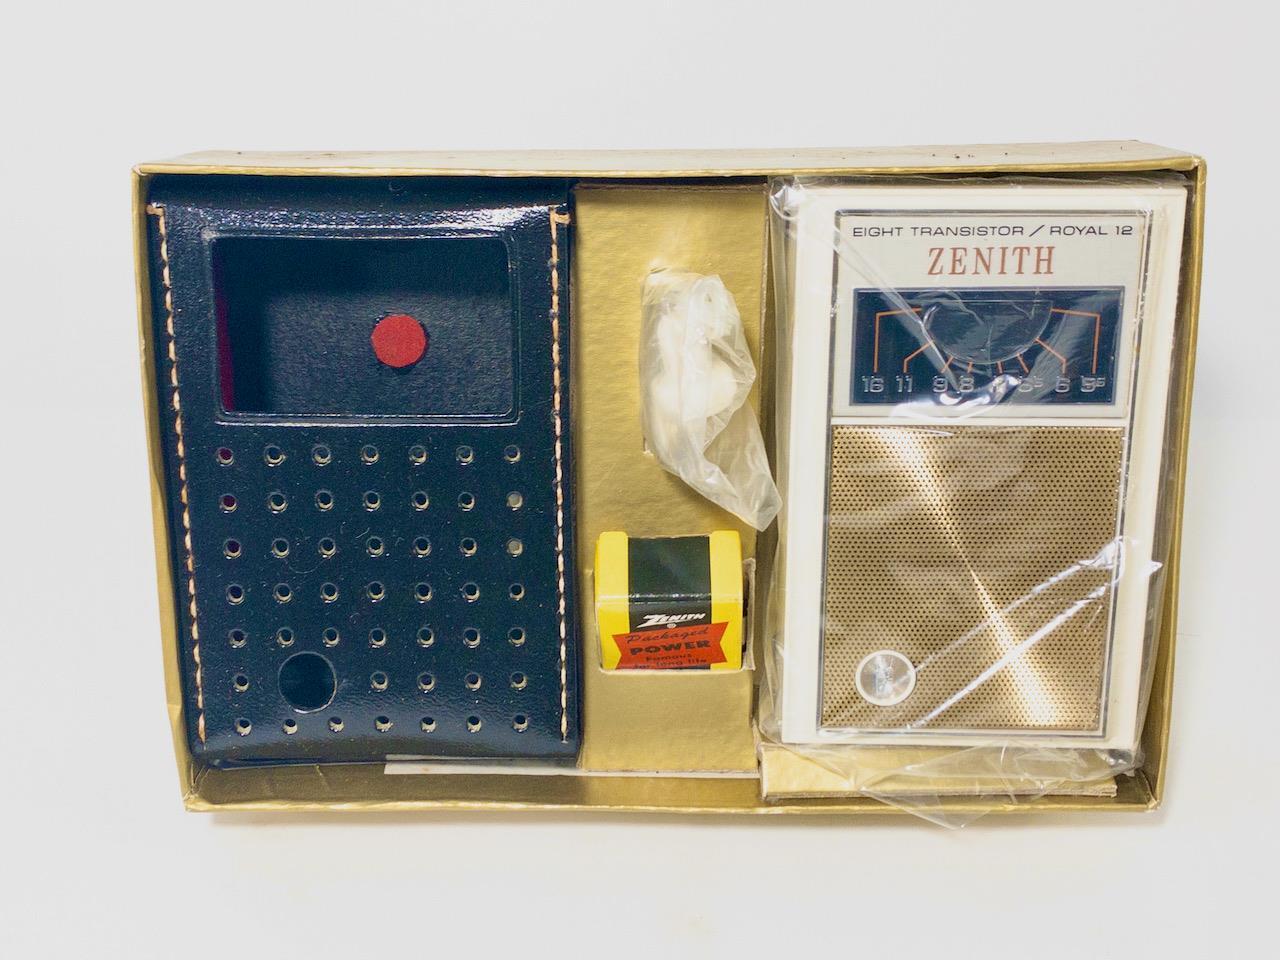 Zenith 8 Transistor Royal 12 AM Radio w/ Box, Complete, New in Box, White Model